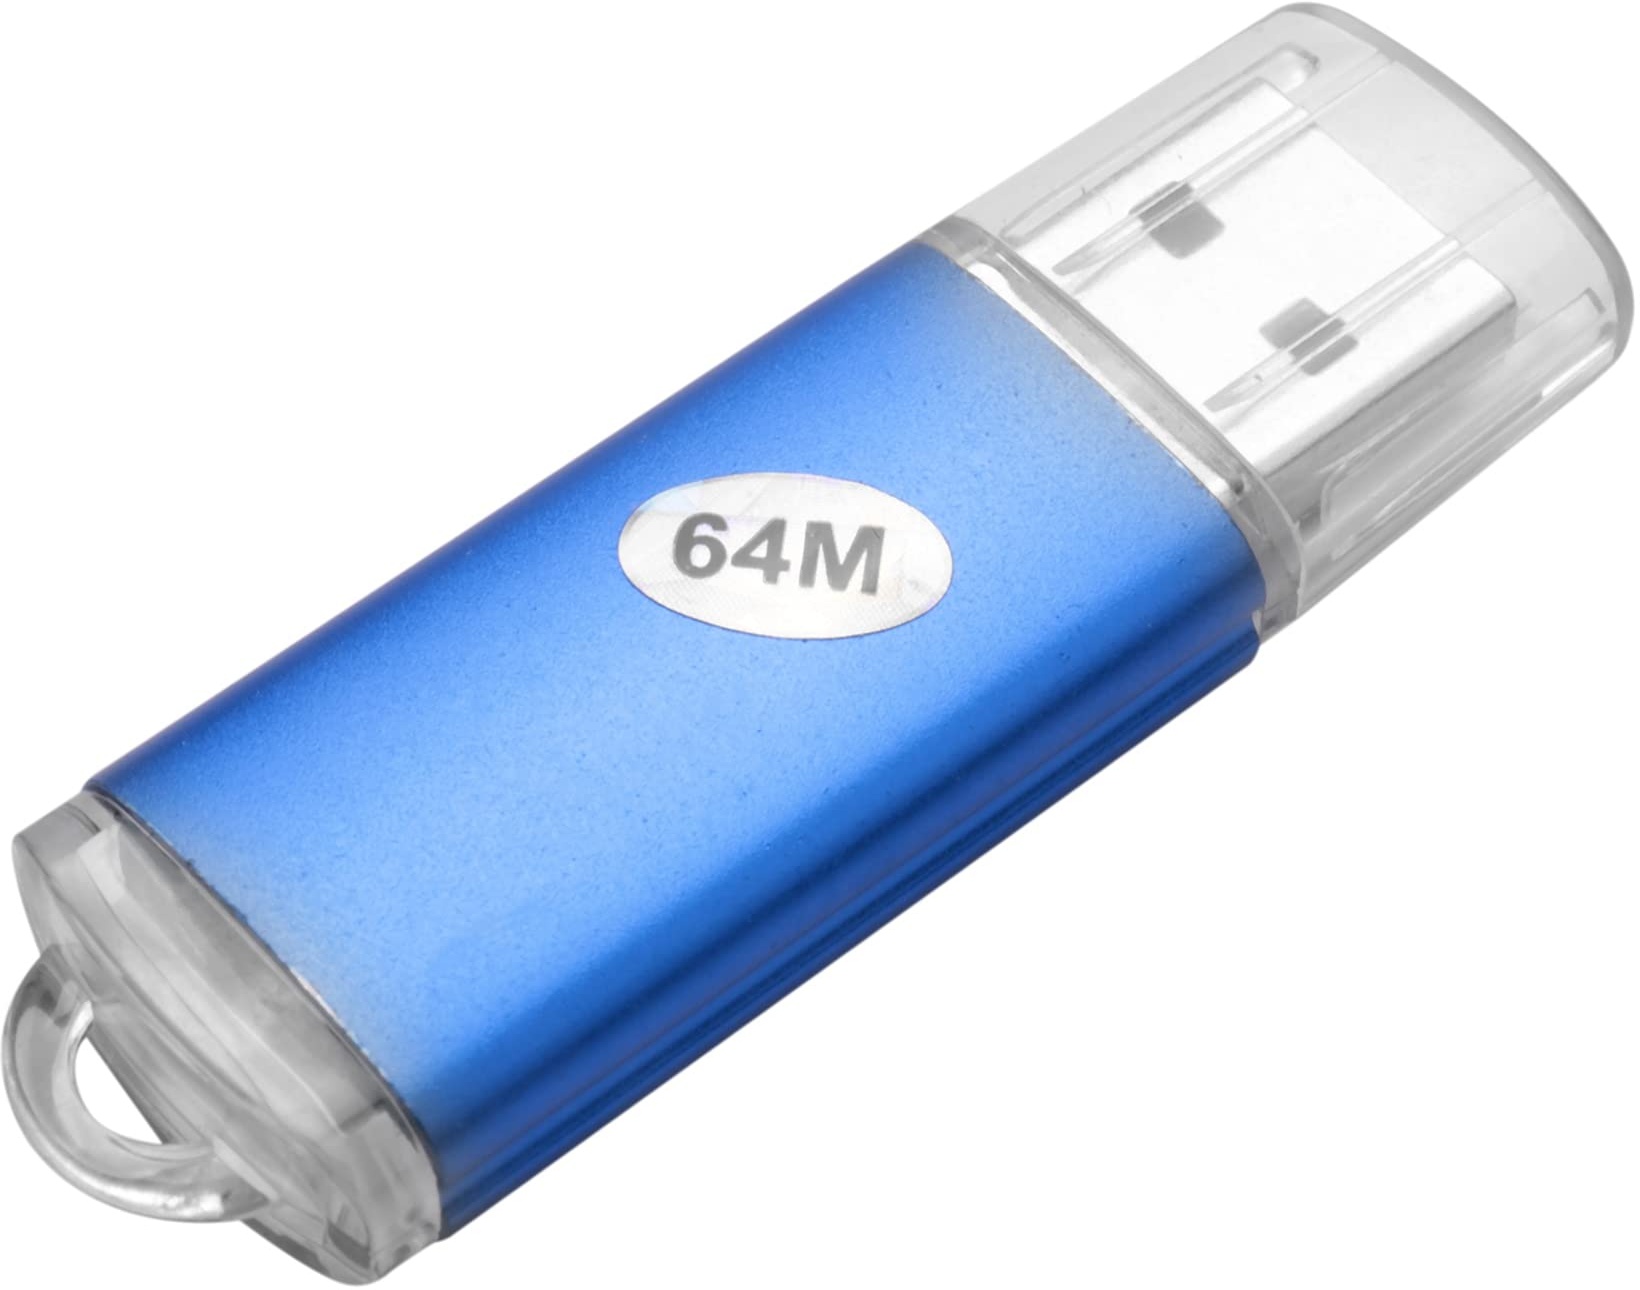 Doumneou 64 MB USB 2.0-Flash-Speicherstick Thumb Drive PC Laptop-Speicher